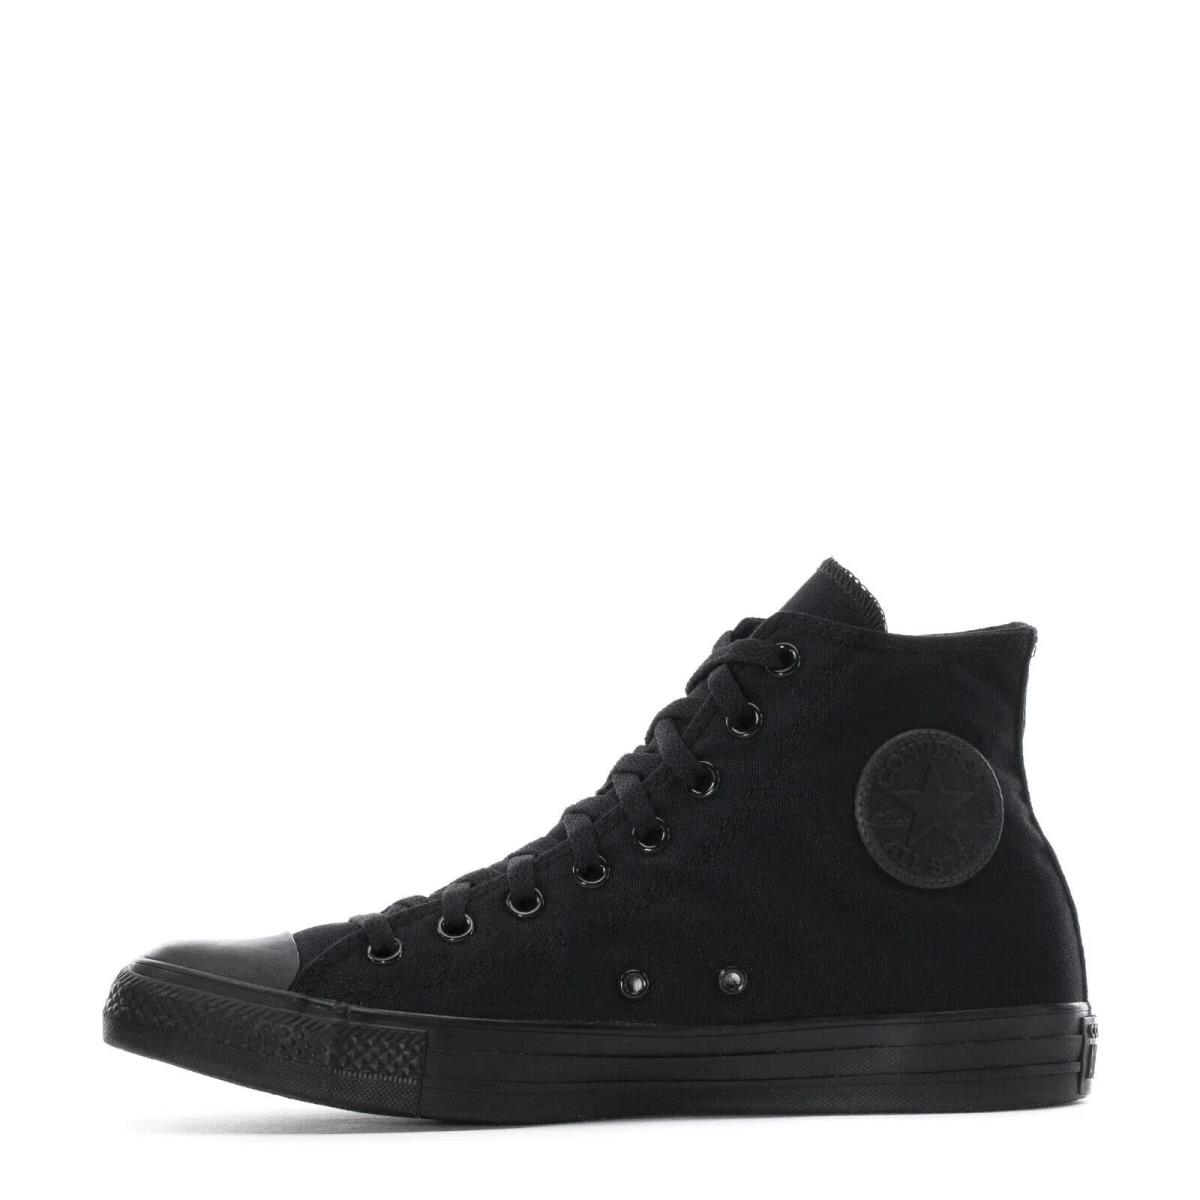 Converse Chuck Taylor HI Core Black HI Top Casual Athletic Sneakers - Black